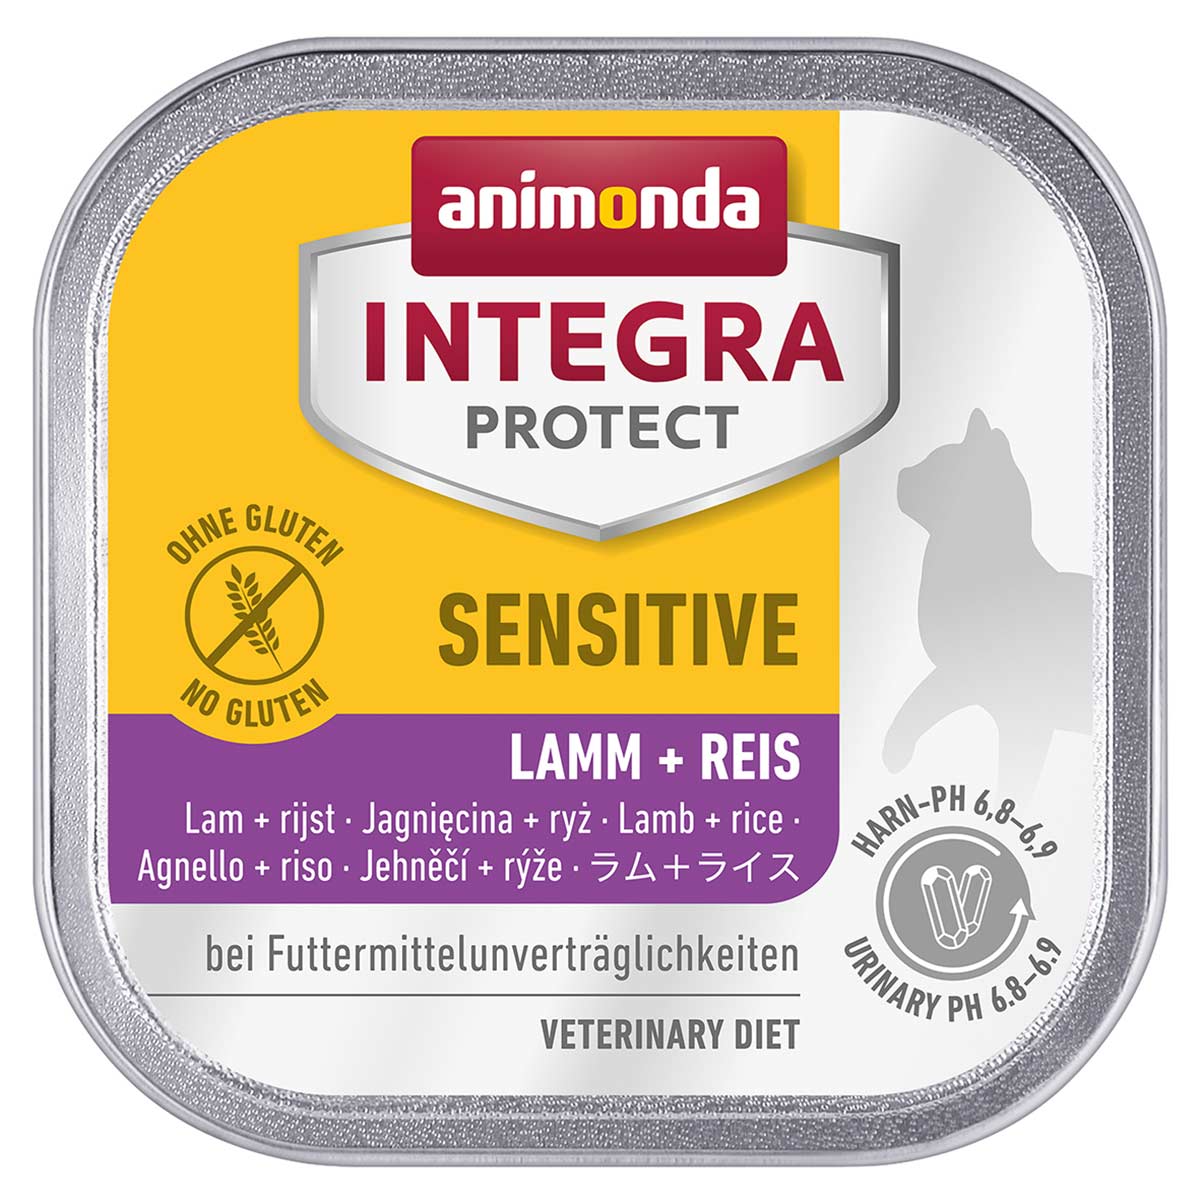 animonda INTEGRA PROTECT Sensitive Lamm und Reis 16x100g von animonda Integra Protect